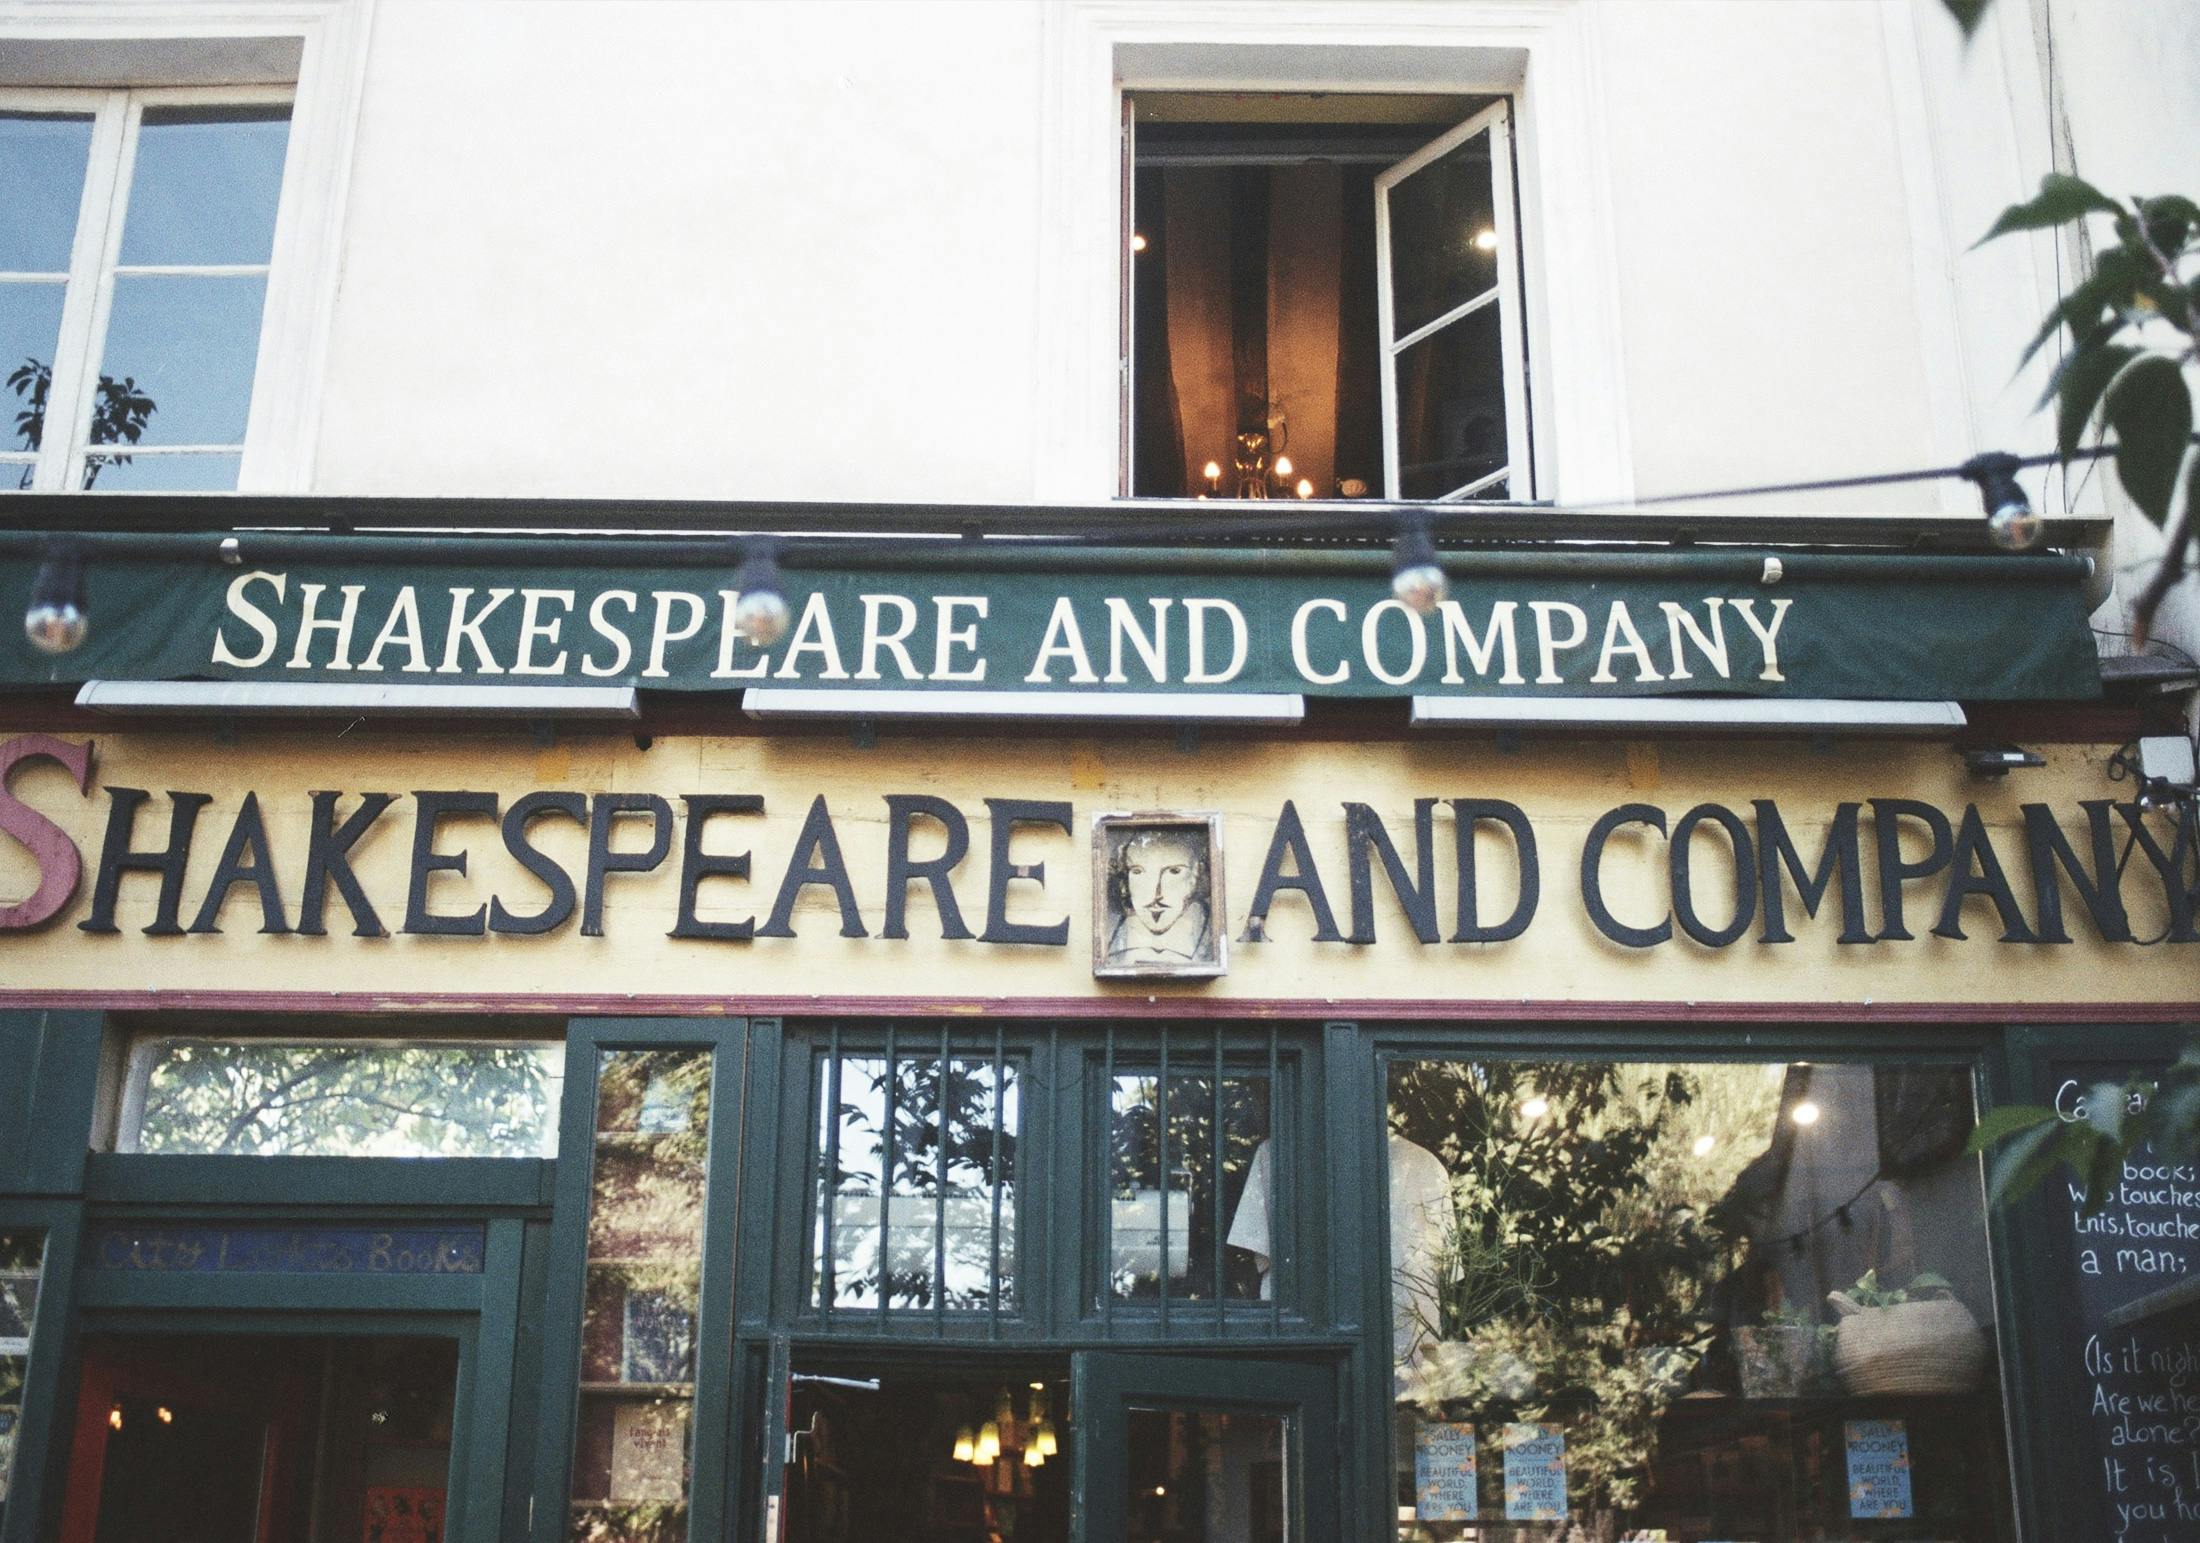 Shakespeare and Company.